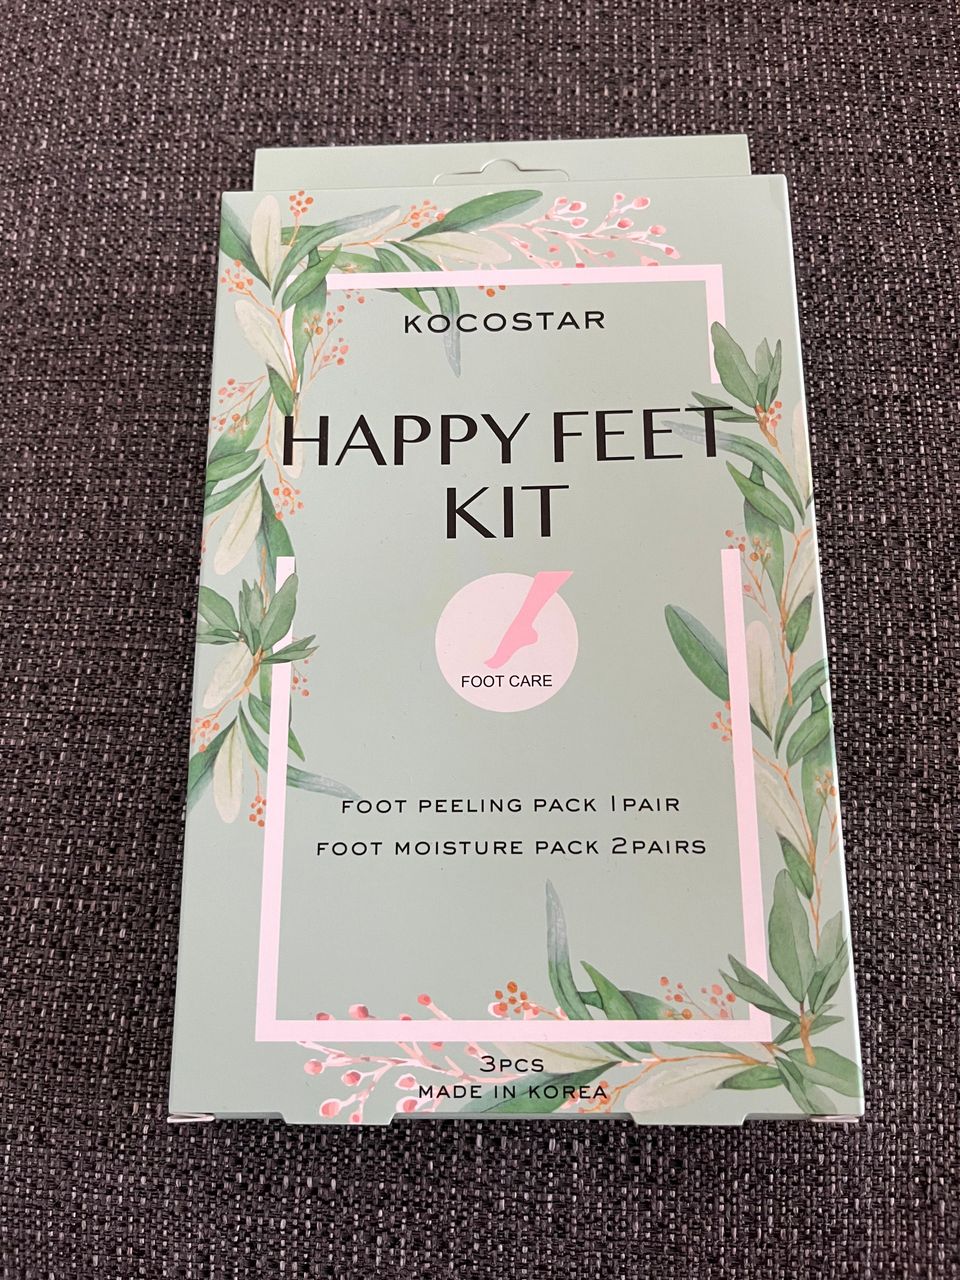 Kocostar Happy feet kit